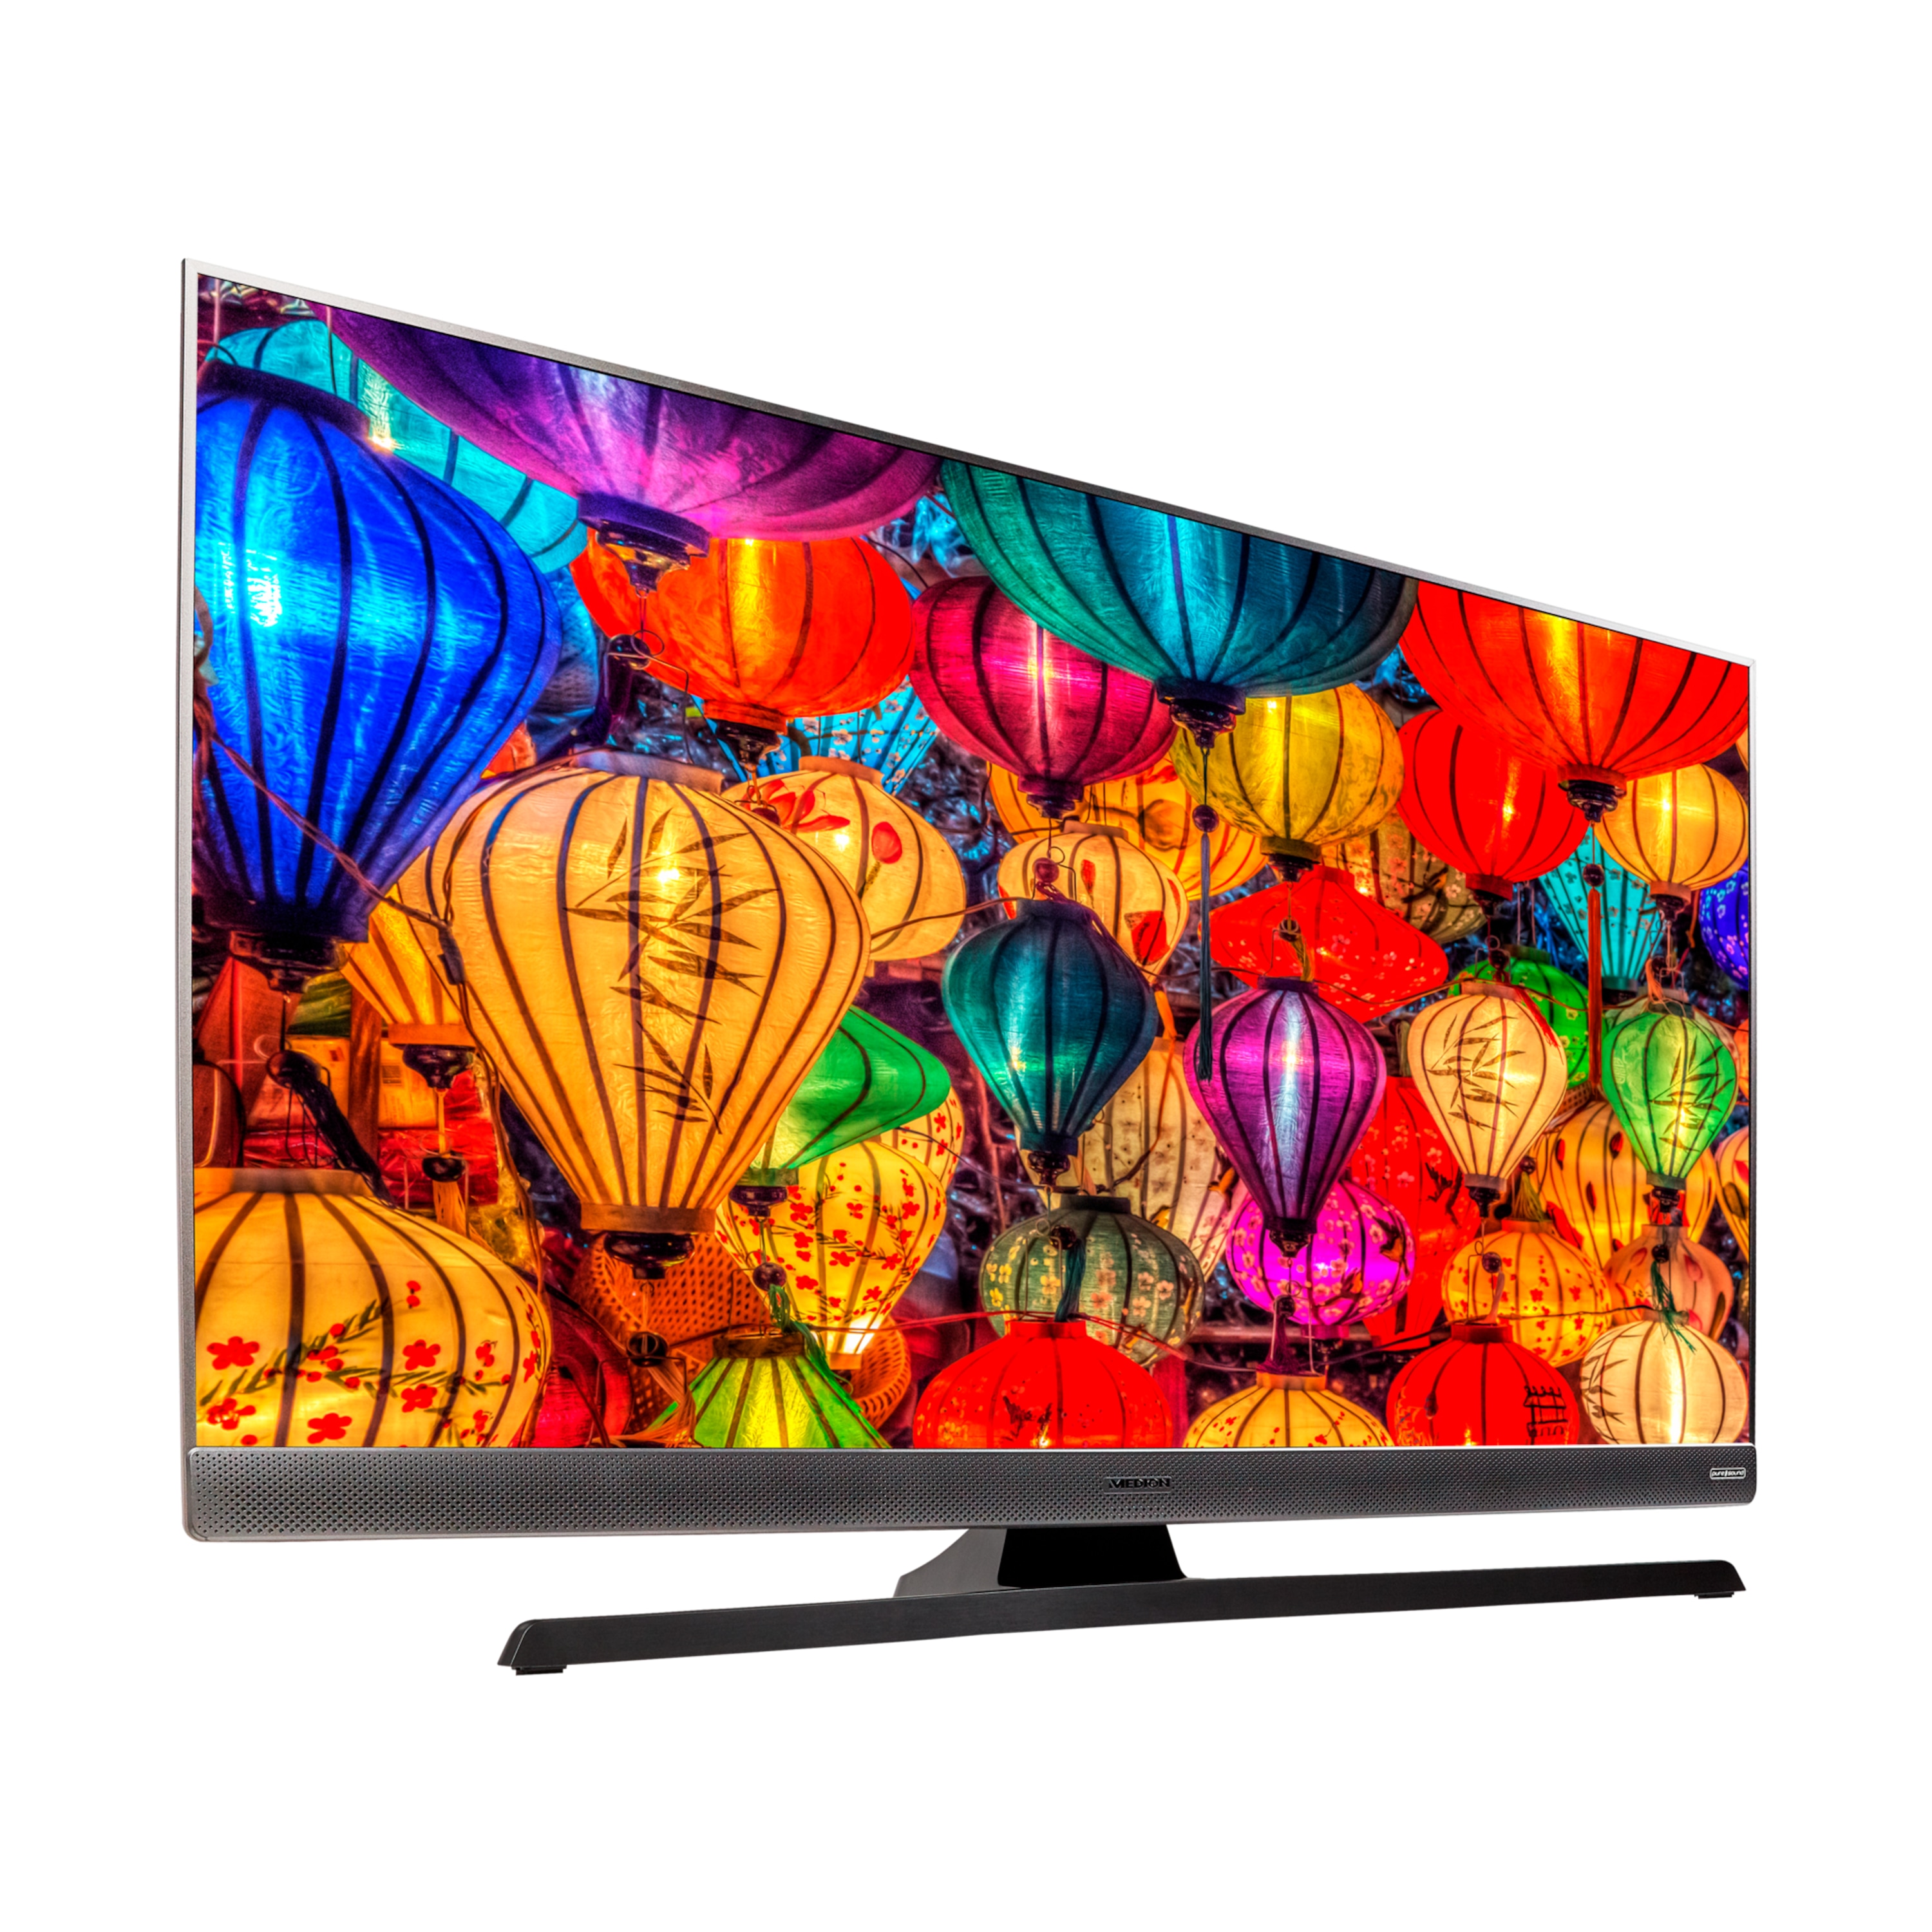 MEDION® LIFE® S14900 Smart-TV, 123,2 cm (49'') Ultra HD Display, HDR, PVR ready, Netflix, Bluetooth®, DTS HD, HD Triple Tuner, CI+